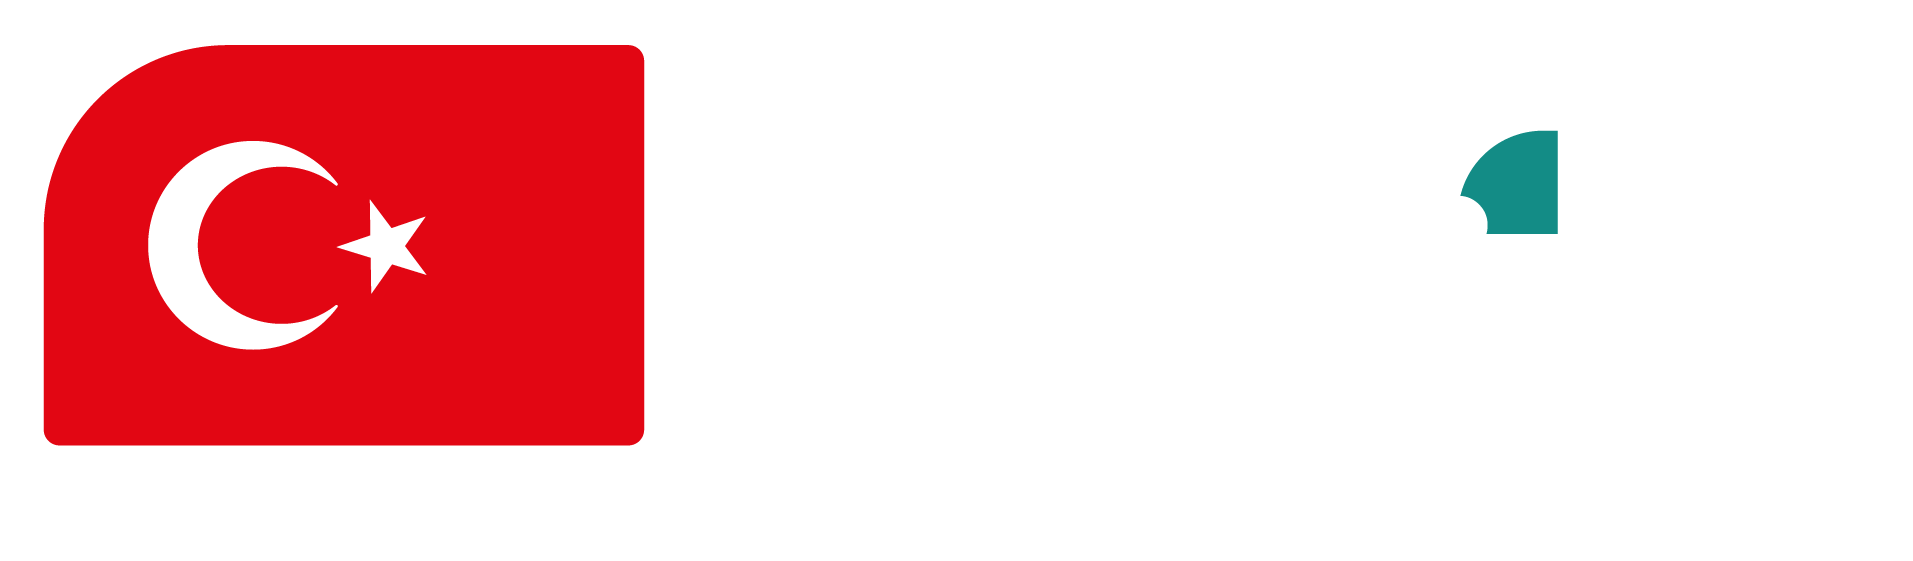 Trading from Turkiye